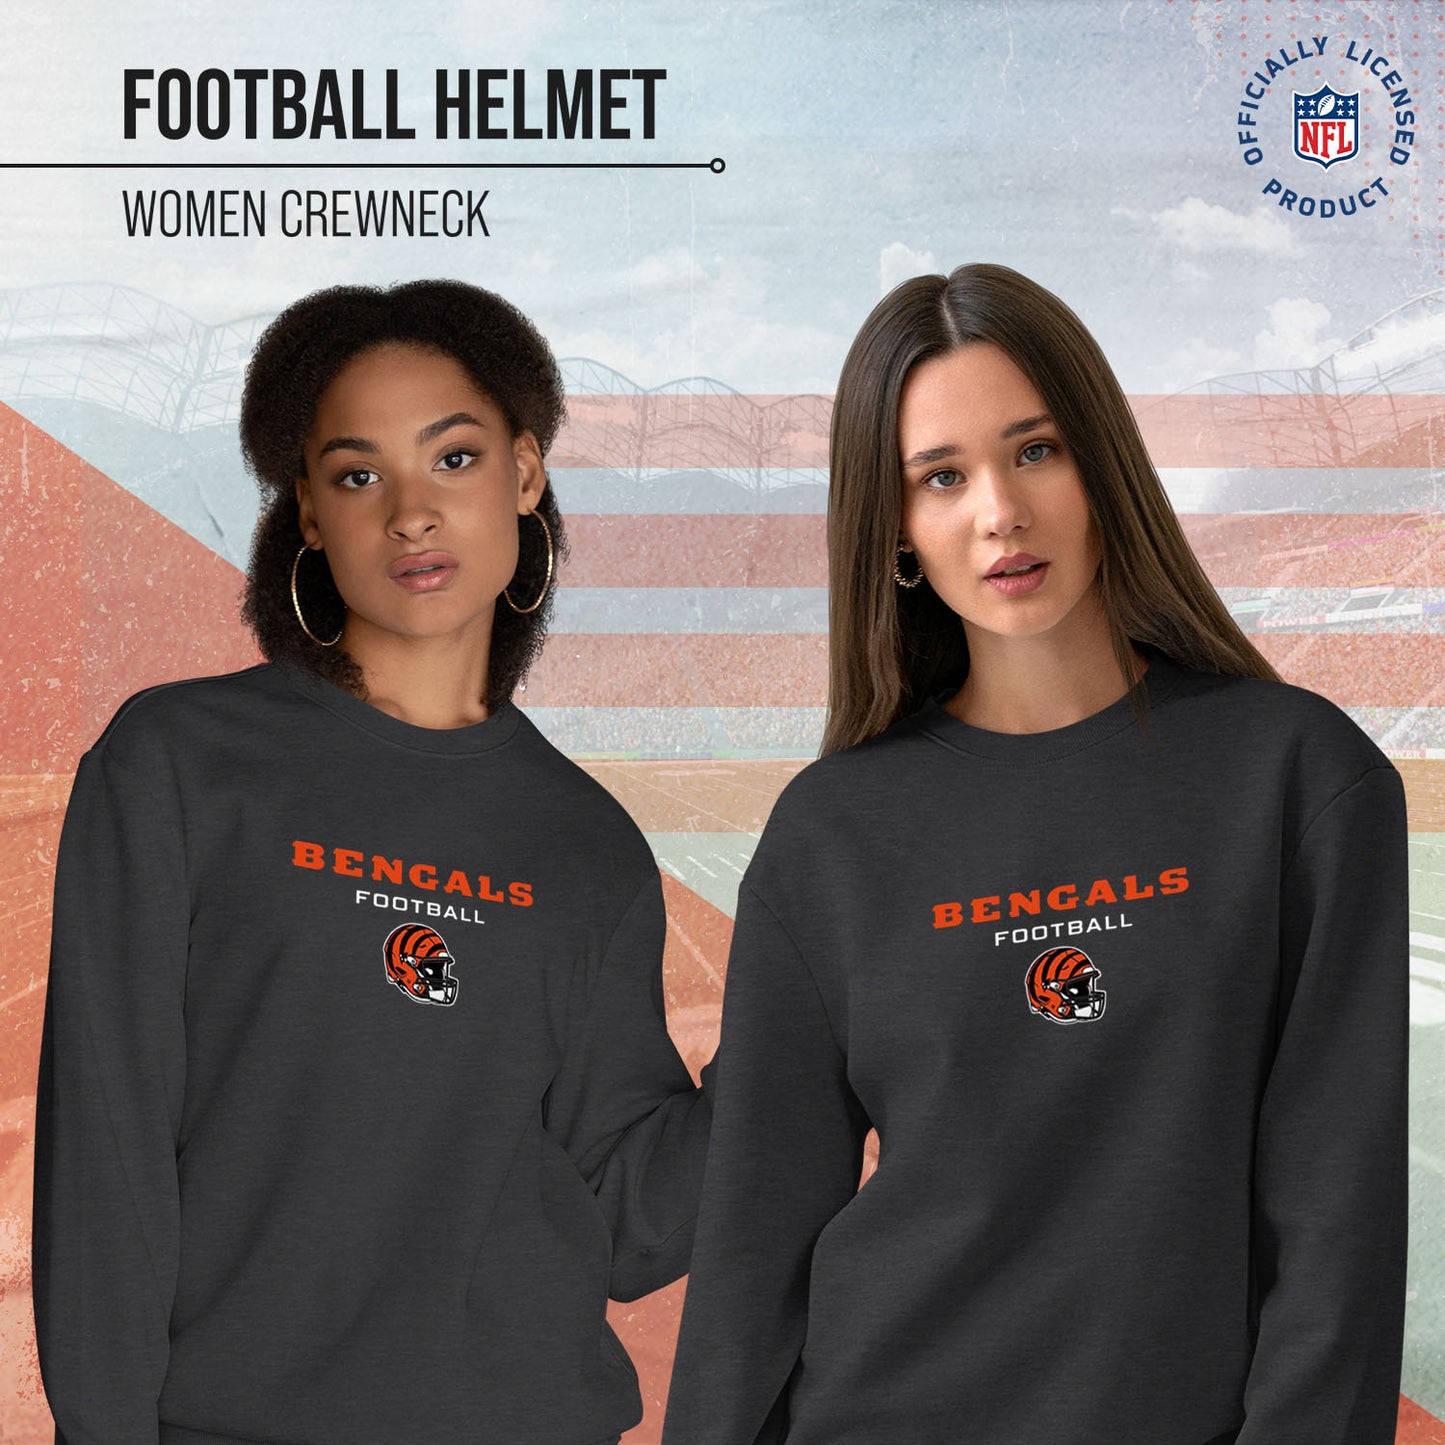 Cincinnati Bengals Women's NFL Football Helmet Charcoal Slouchy Crewneck -Tagless Lightweight Pullover - Charcoal